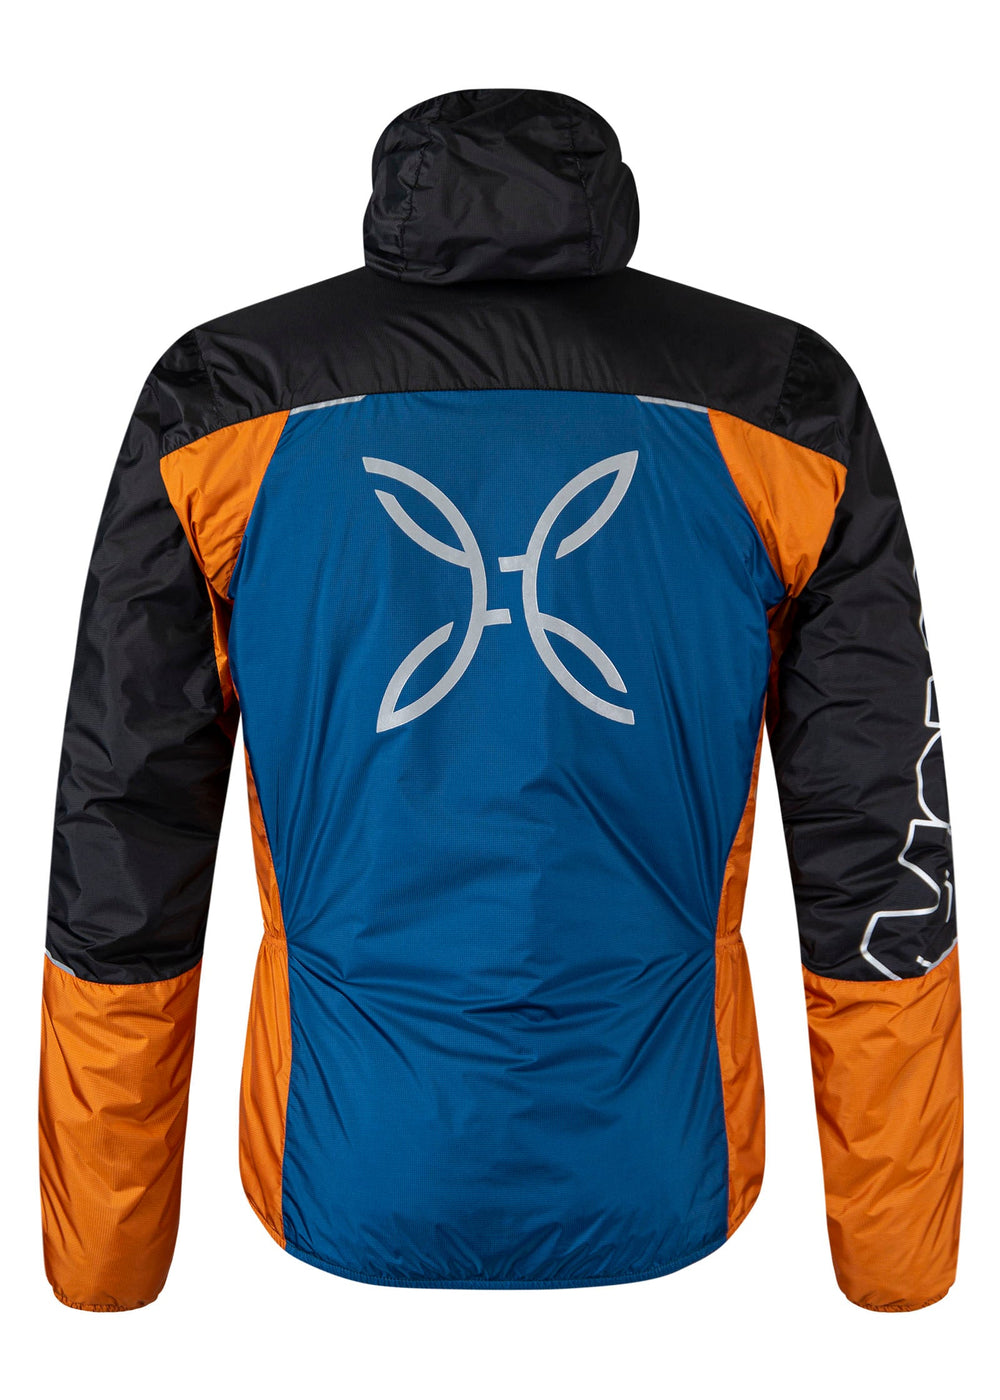 Skisky 2.0 Jacket - Deep Blue/Mandarino (8766) - Blogside